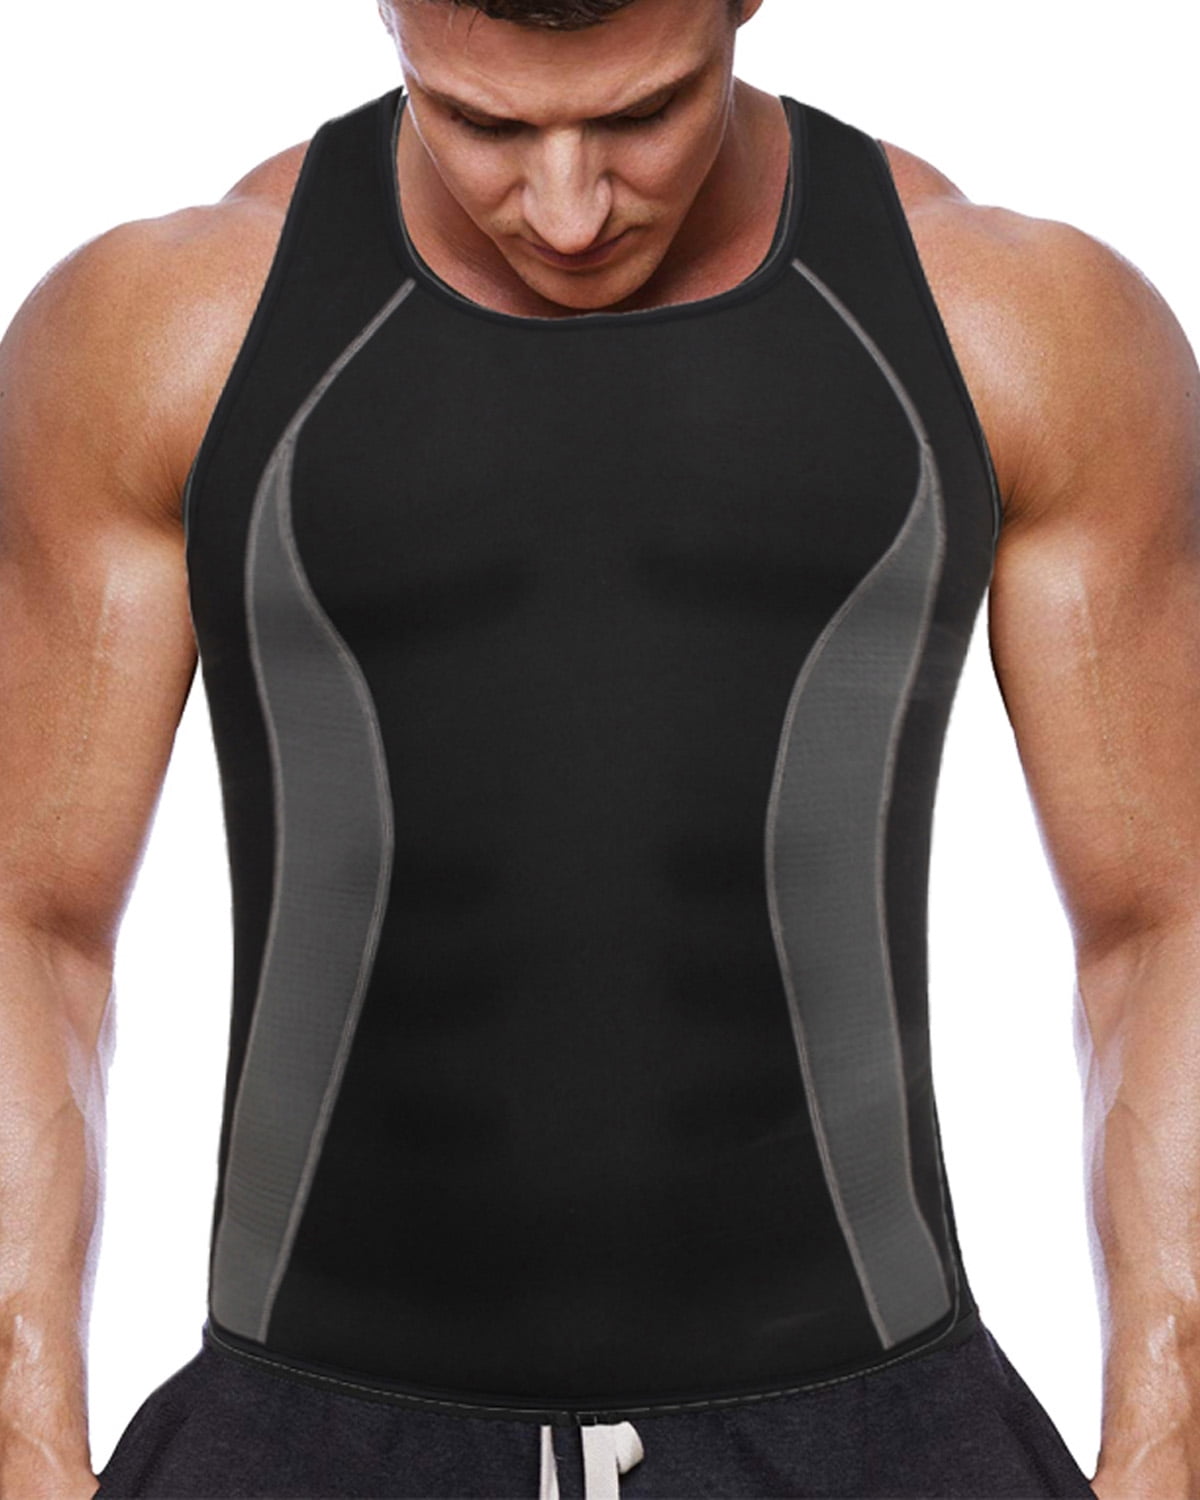 EXTREME Neoprene Men Vest Body Shaper Hot Sweat Workout Tank Top Sauna Suit USA